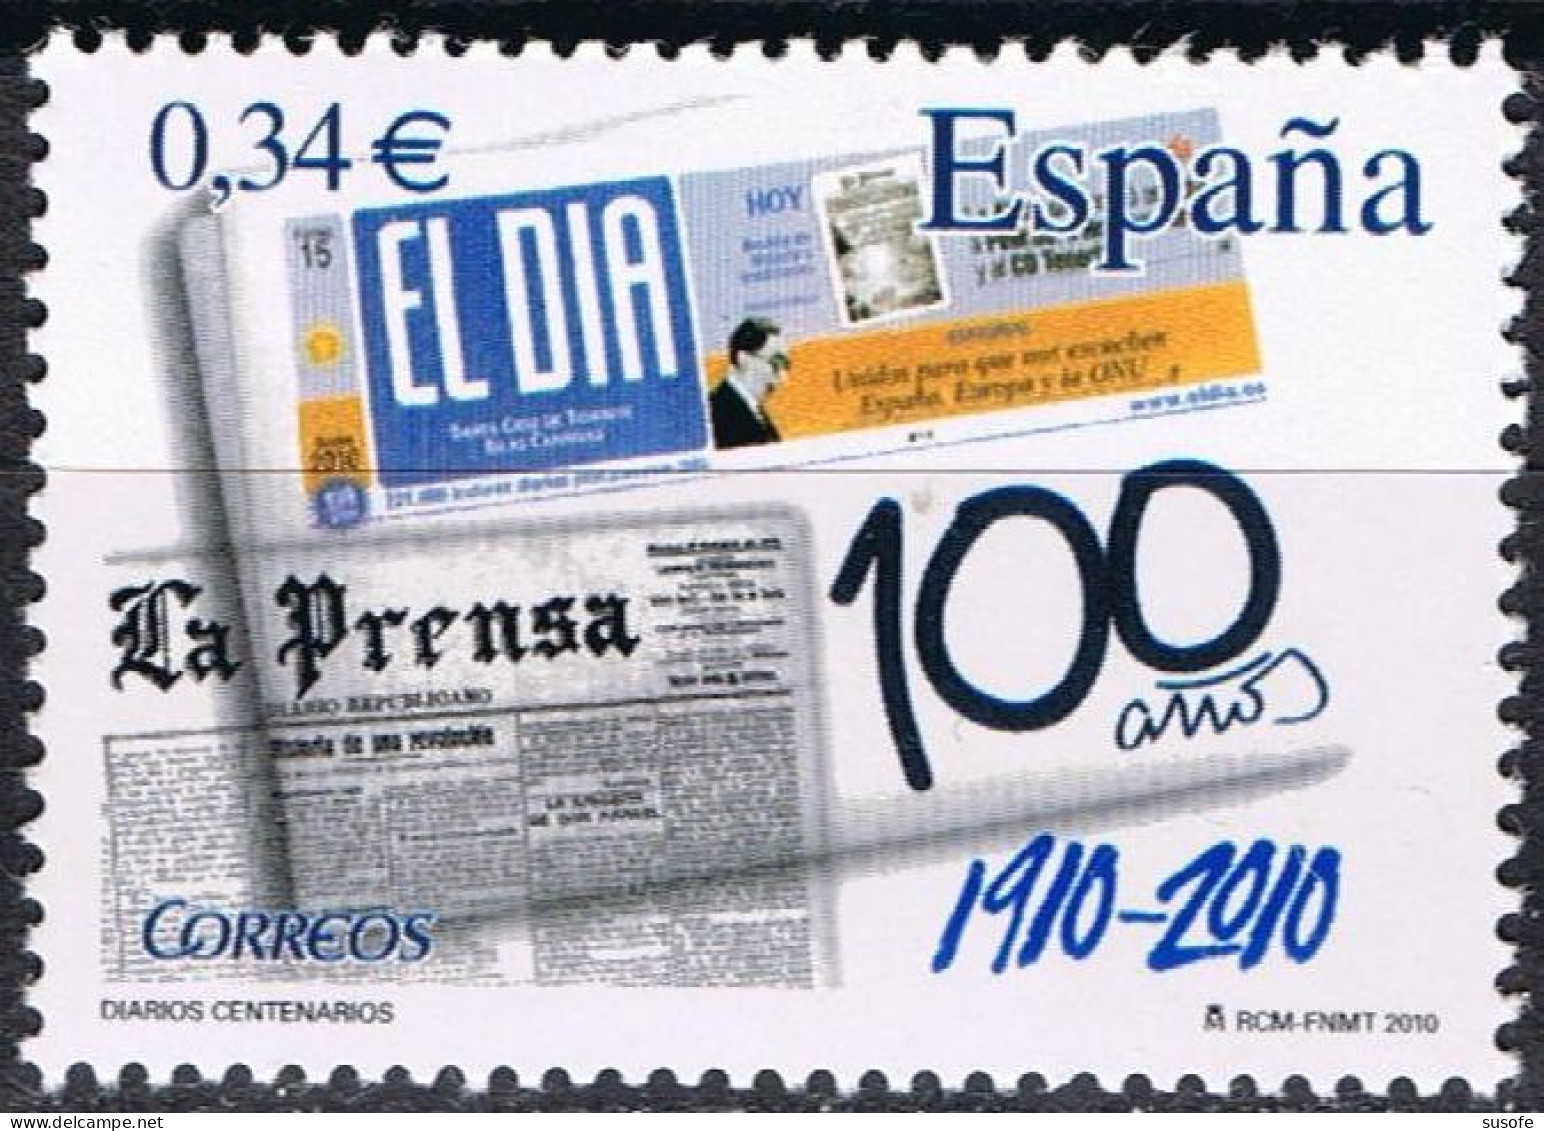 España 2010 Edifil 4604 Sello ** Diarios Centenarios El Dia (1910-2010) Tenerife Michel 4551 Yvert 4256 Spain Stamp - Nuovi